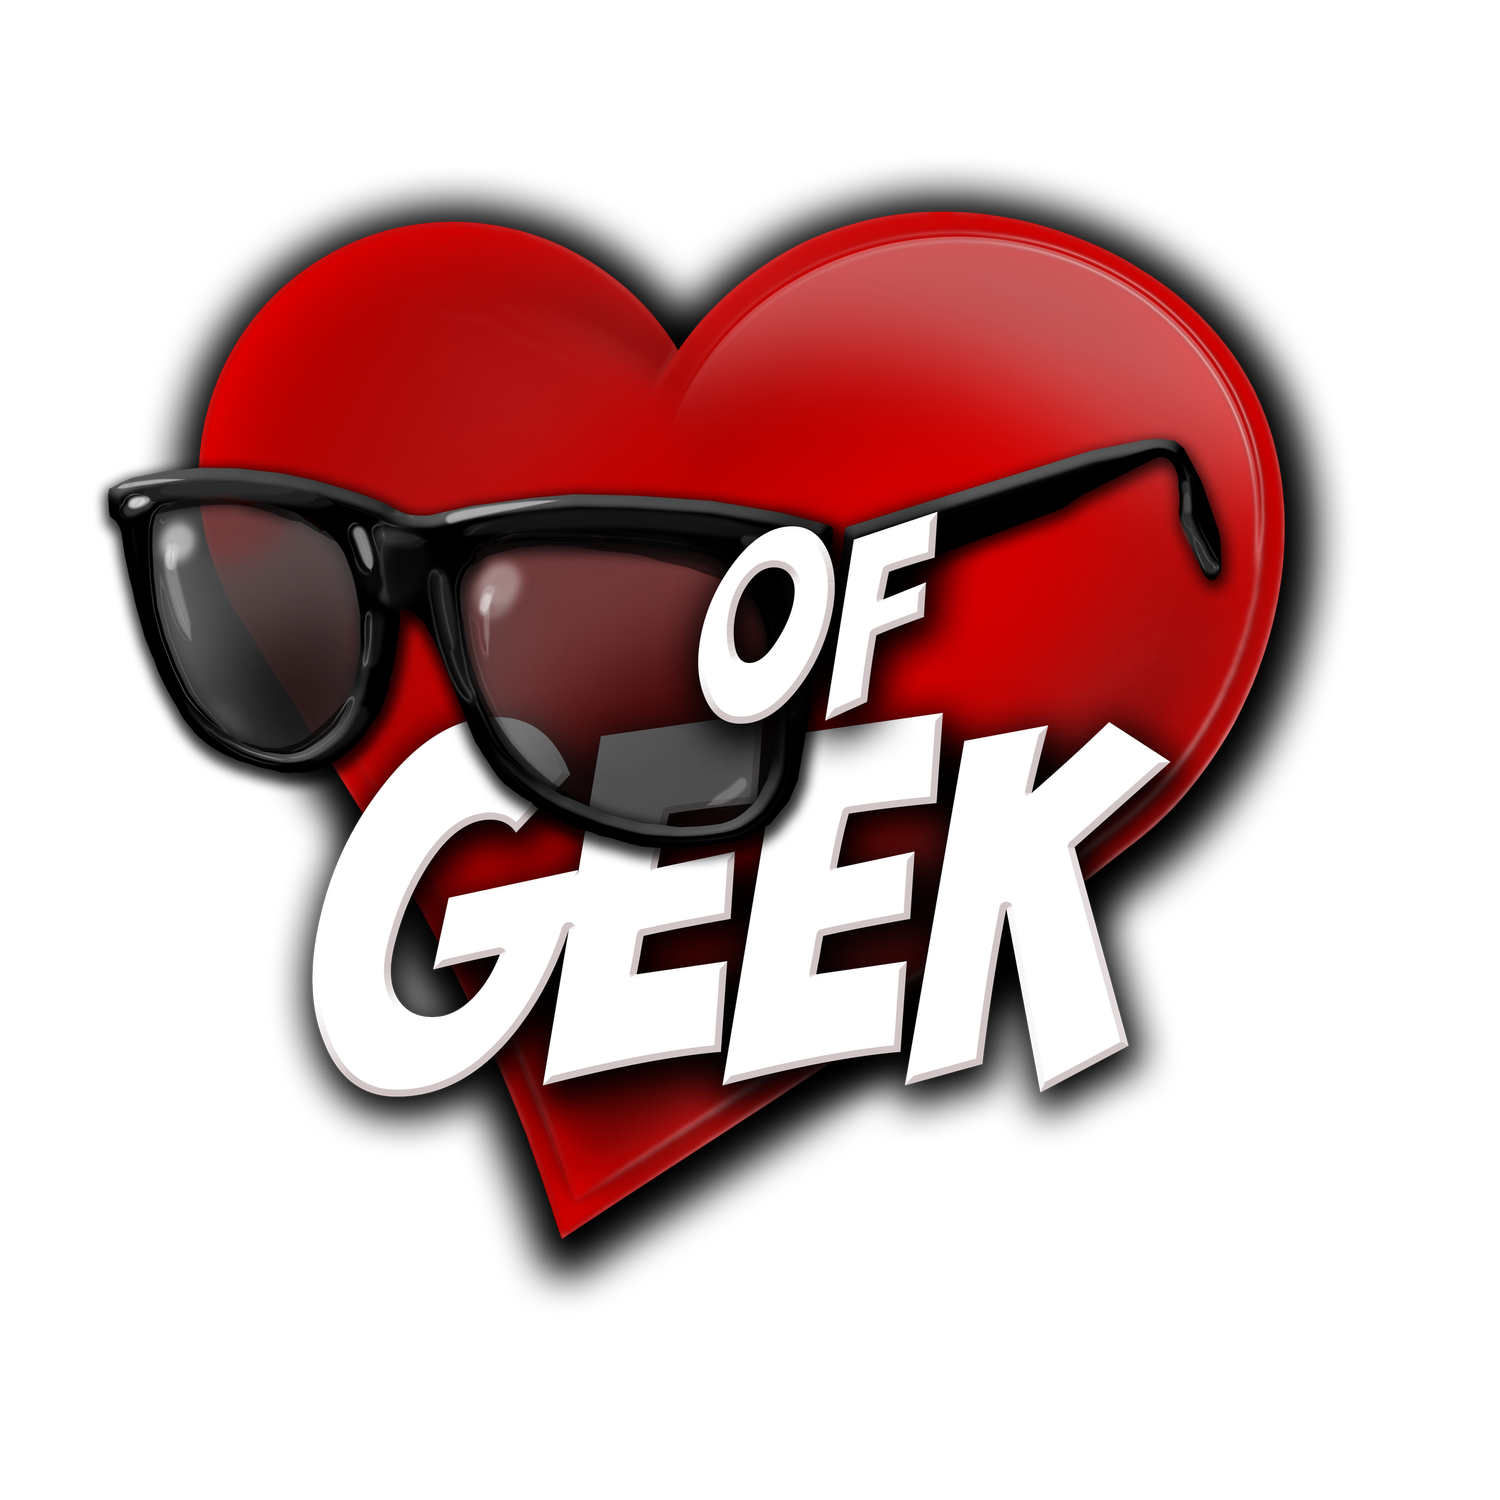 The Heart of Geek